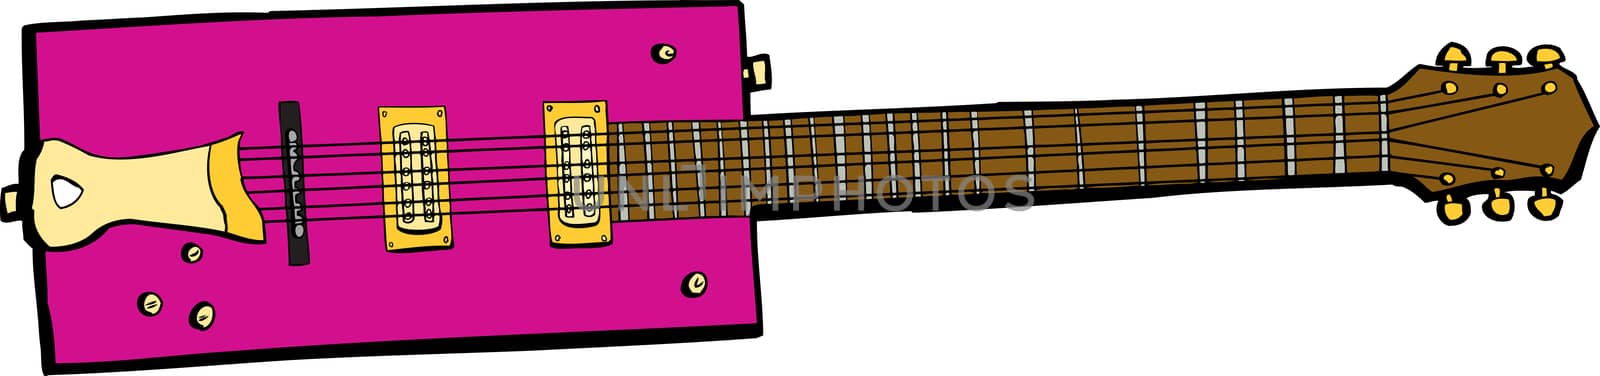 Single Rectangular Electric Guitar by TheBlackRhino